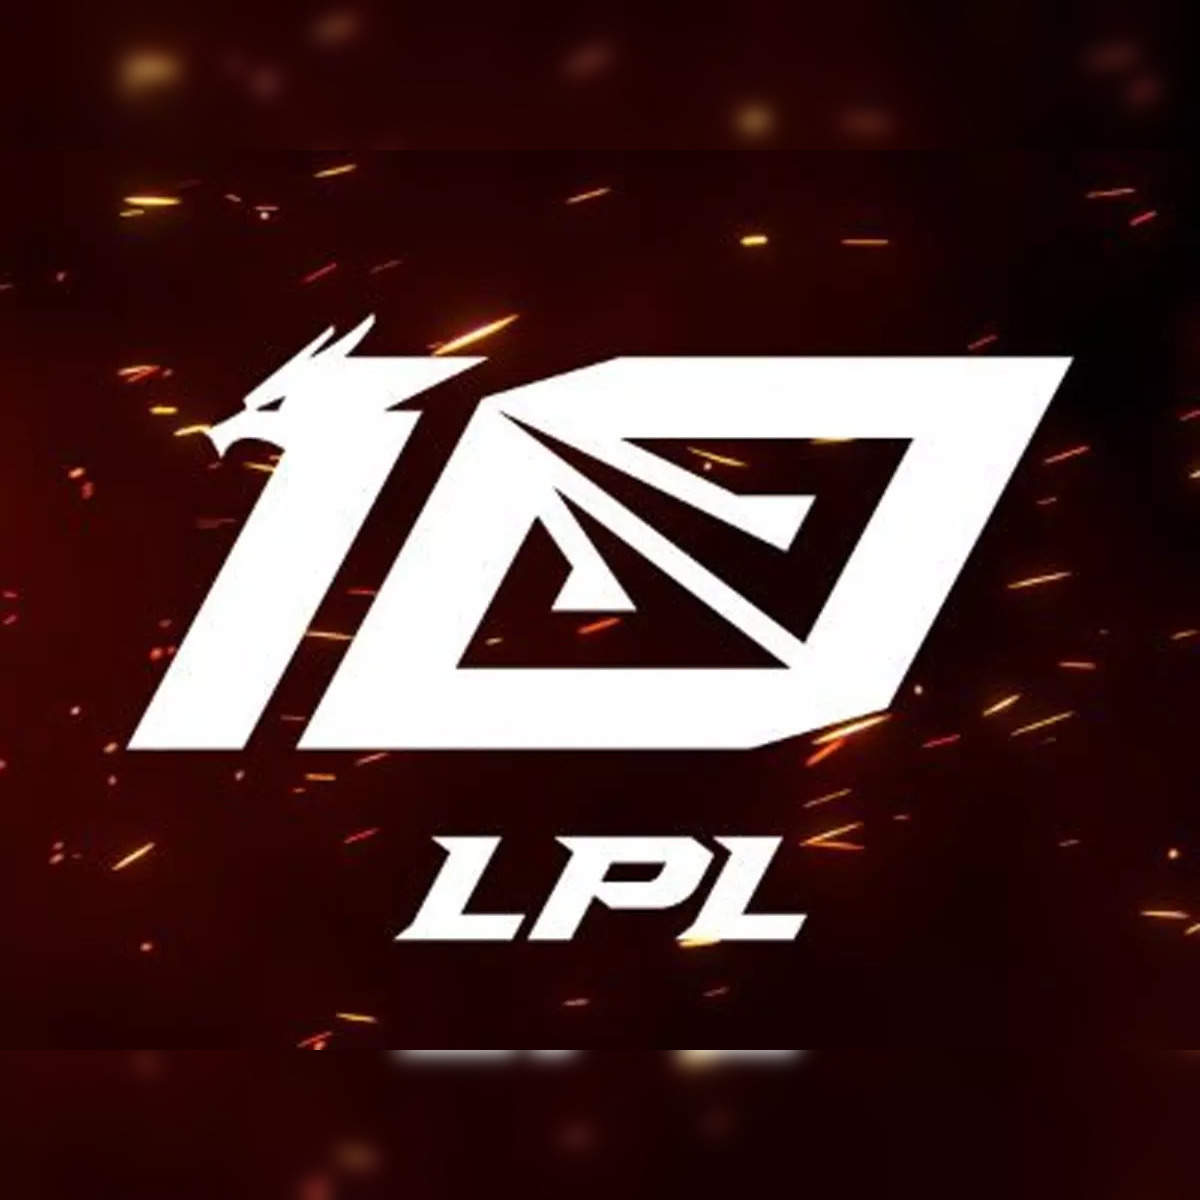 2021 League Of Legends World Championship Changes Location